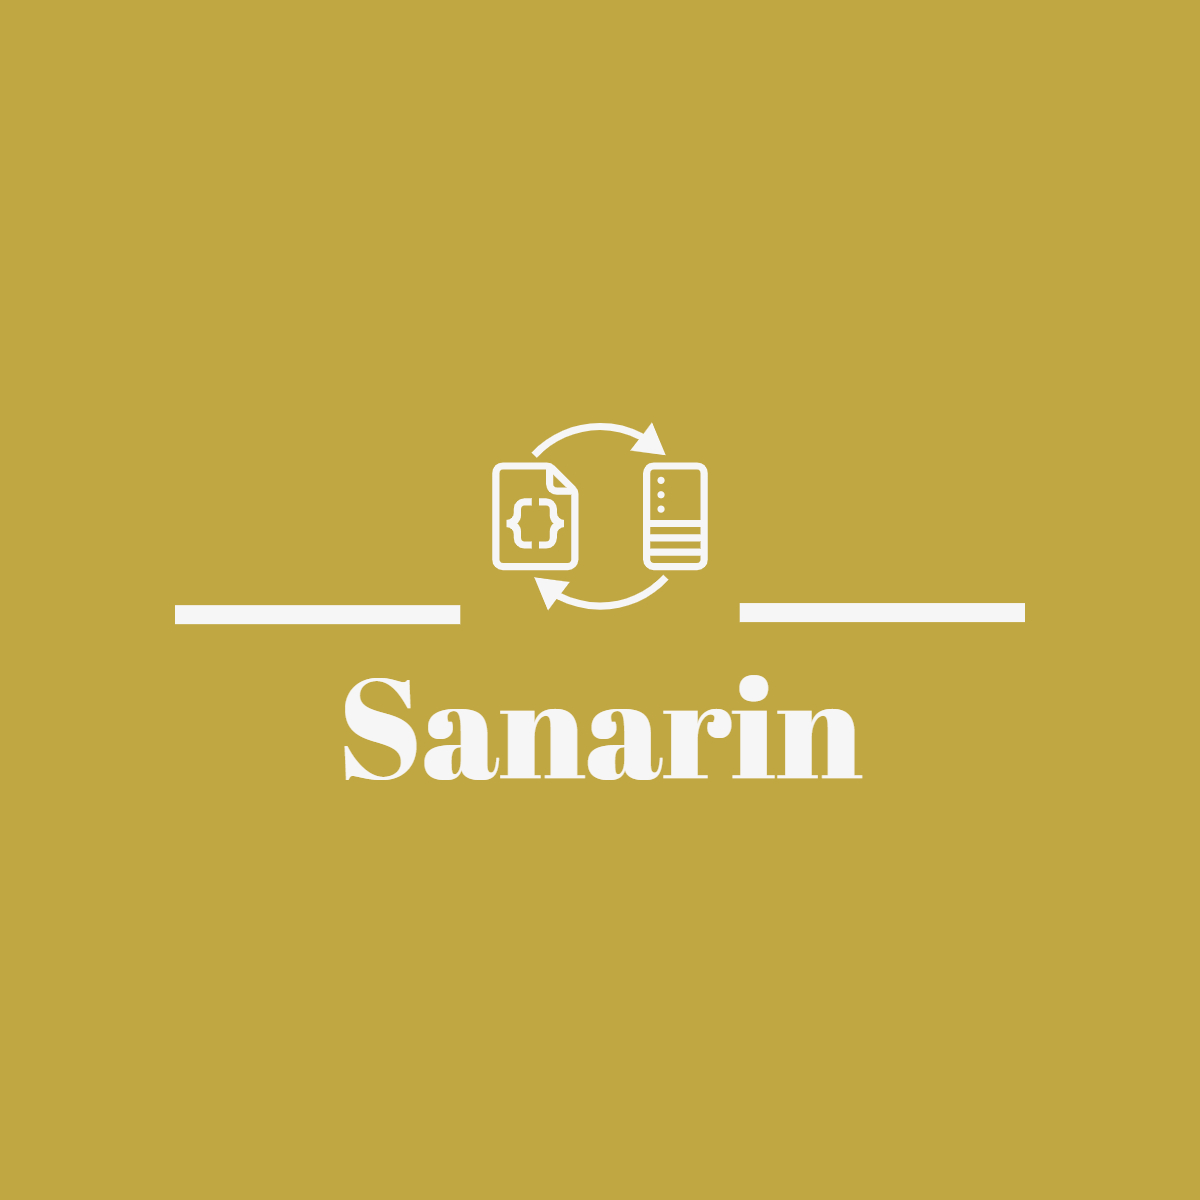 Sanarin